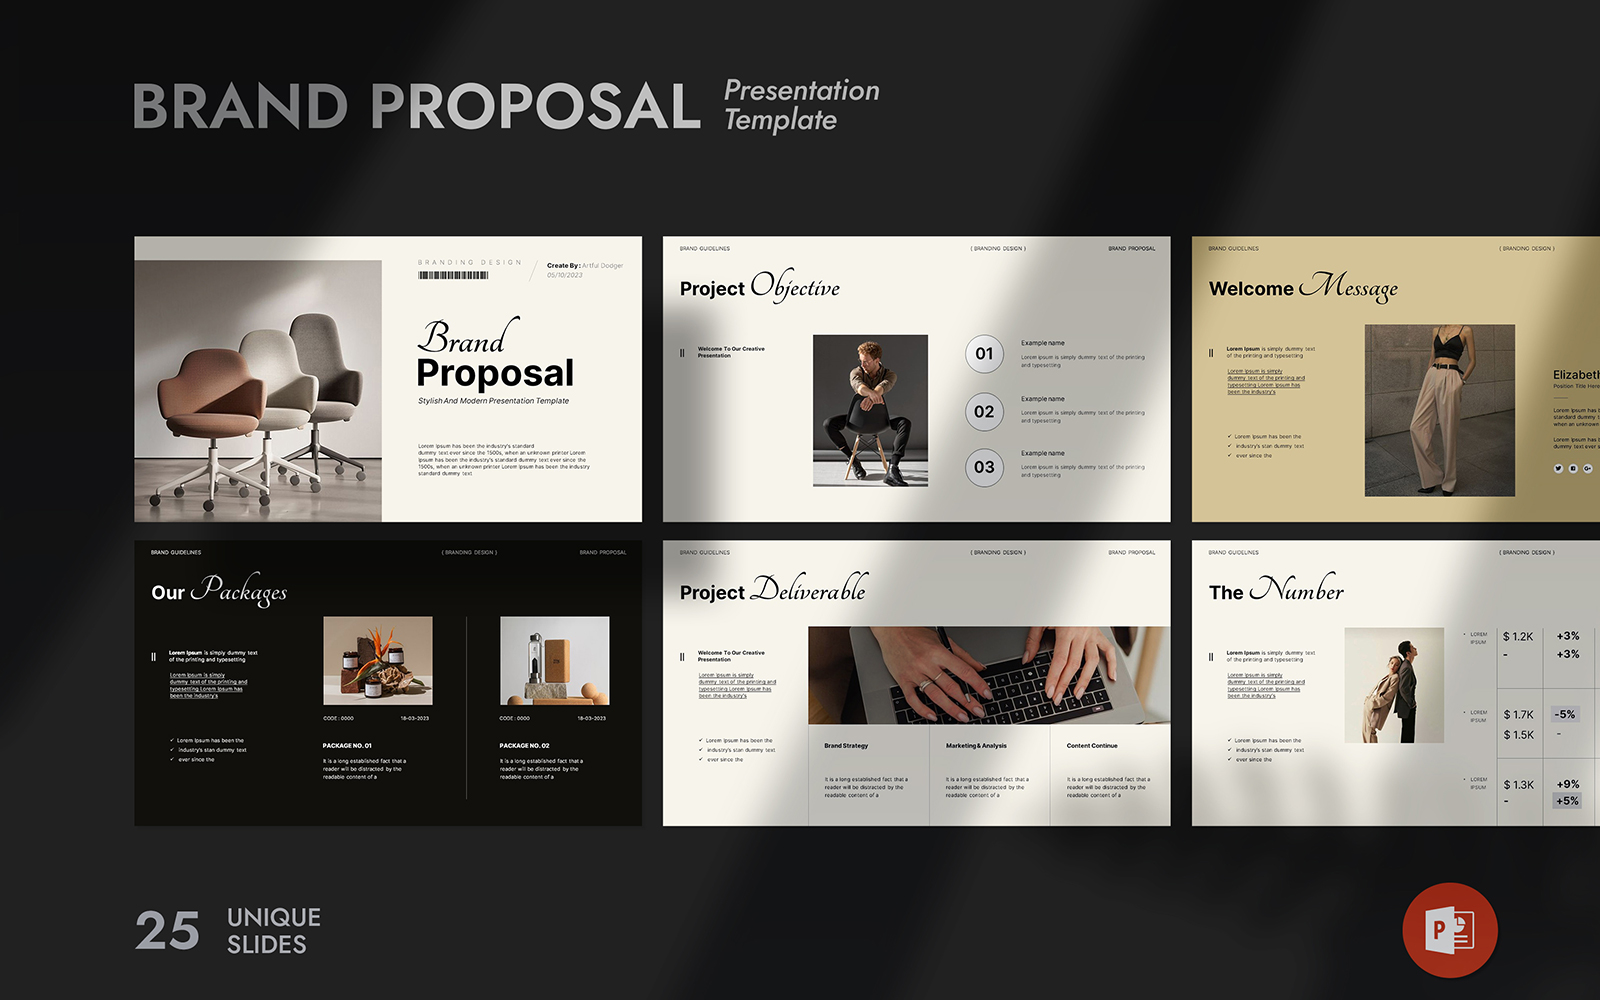 The Brand Proposal Presentation